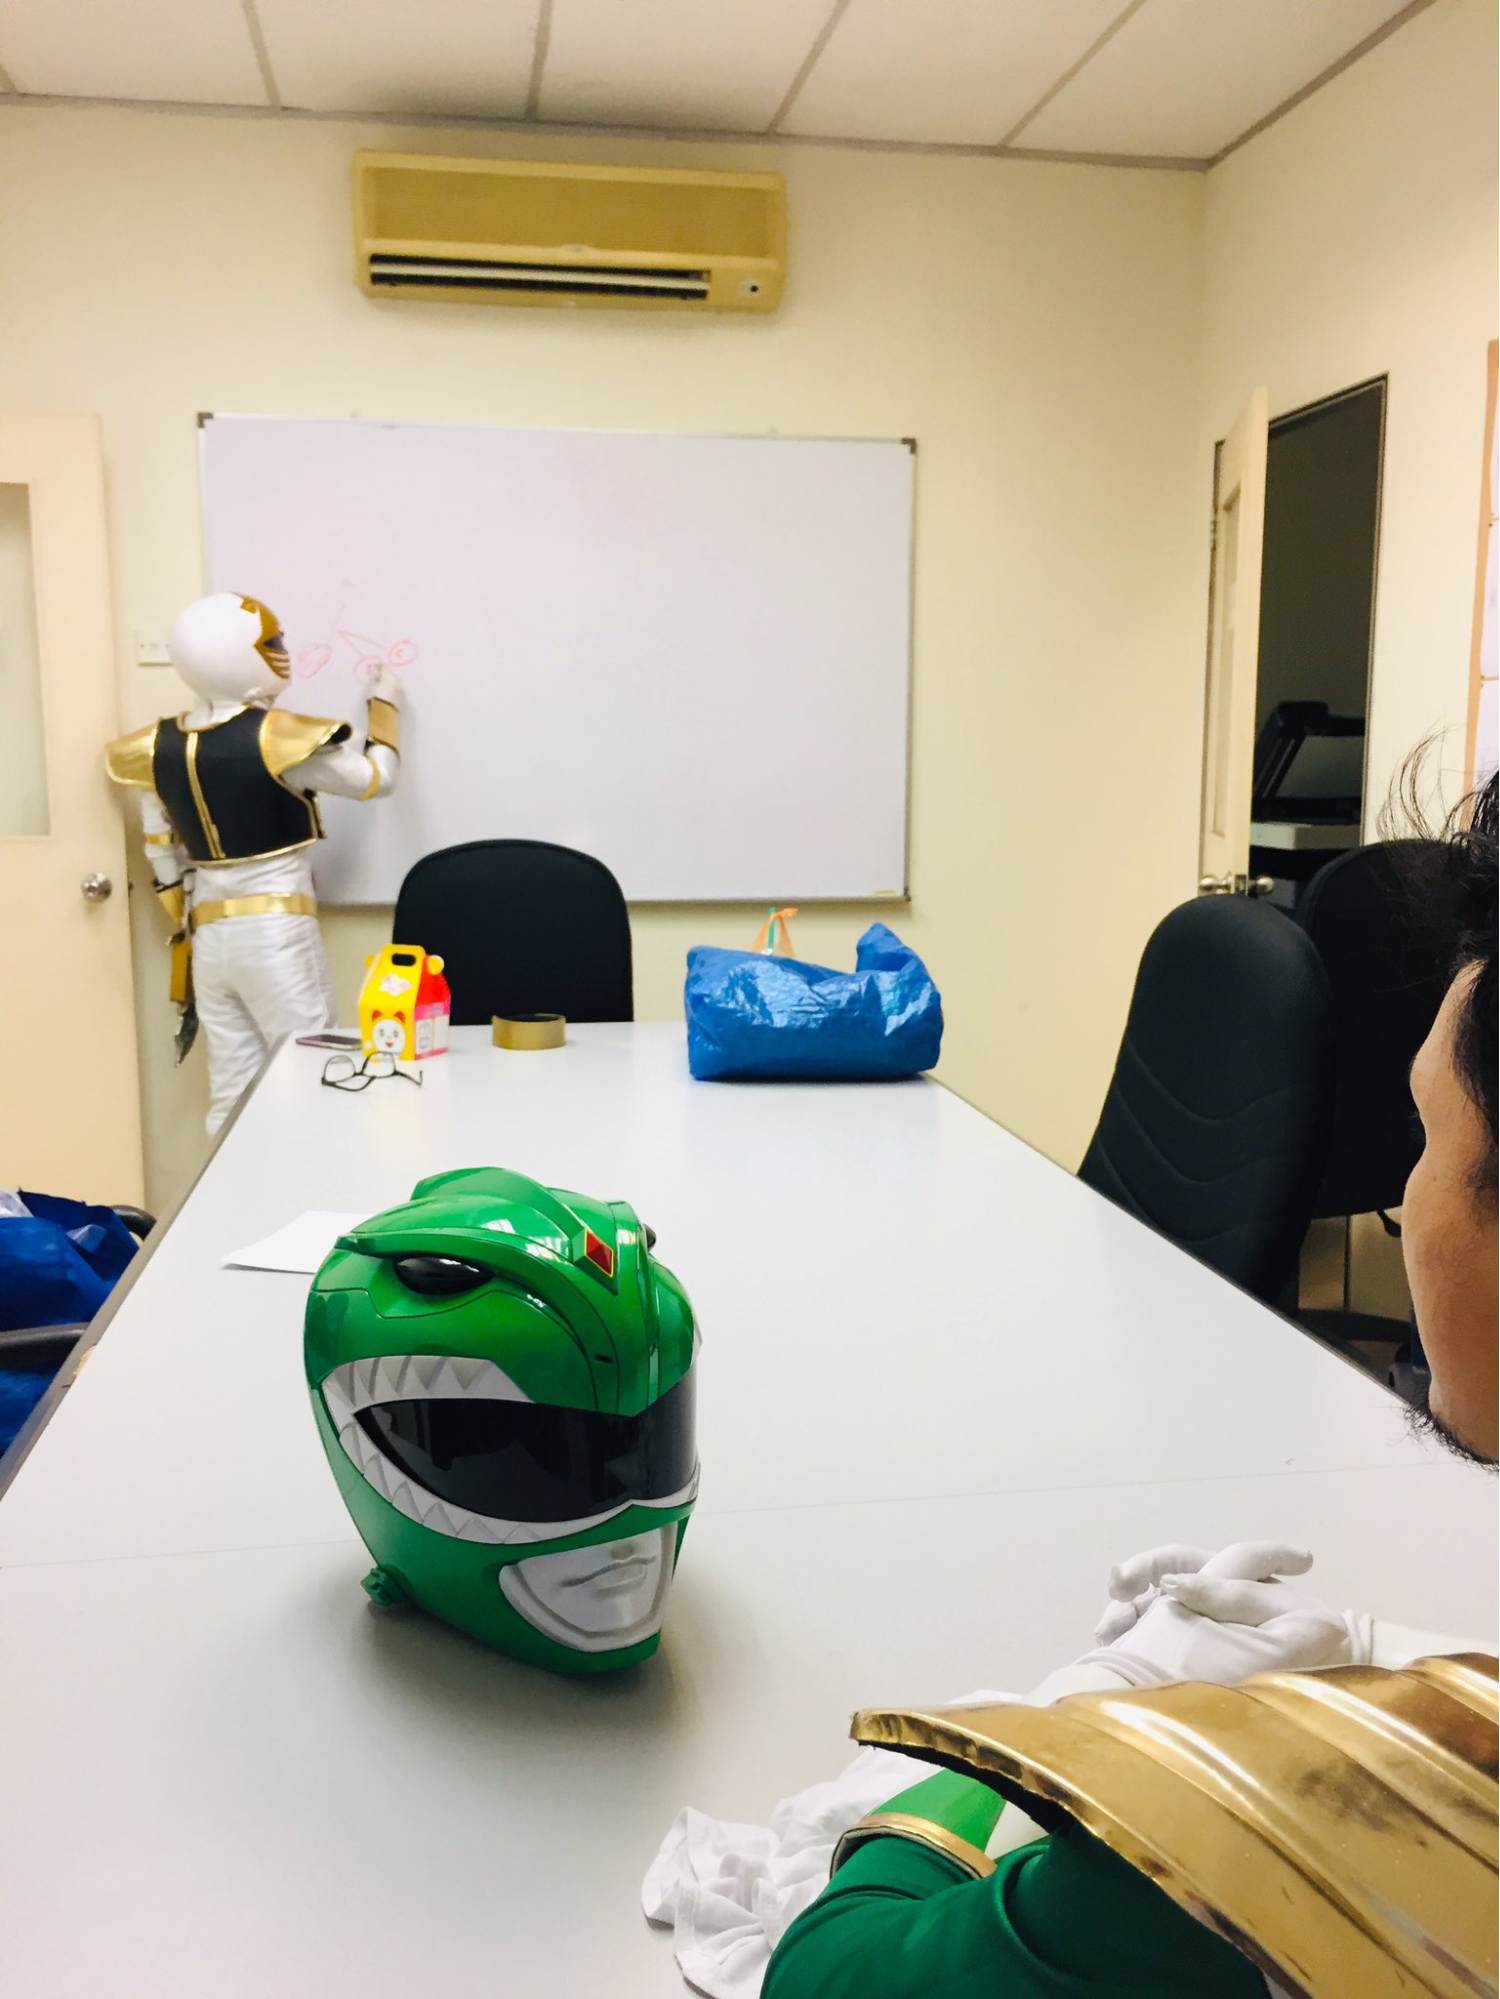 Malaysian man Power Ranger cosplay - whiteboard 